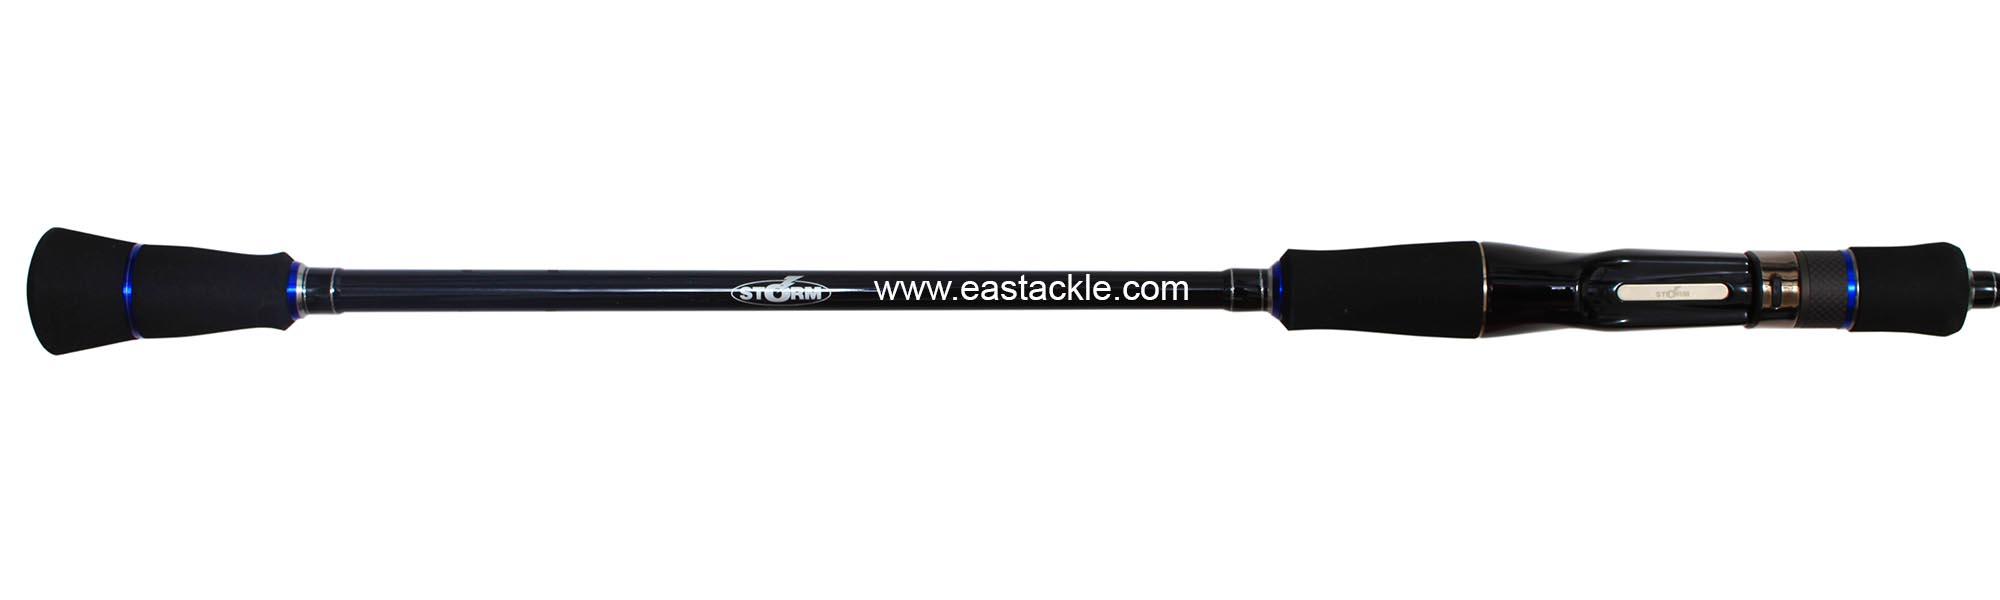 Storm - Gomoku Black Kaiten GBC601-2.5 - Elite Jigging Game - Bait Casting Jigging Rod - Handle Section (Top View) | Eastackle